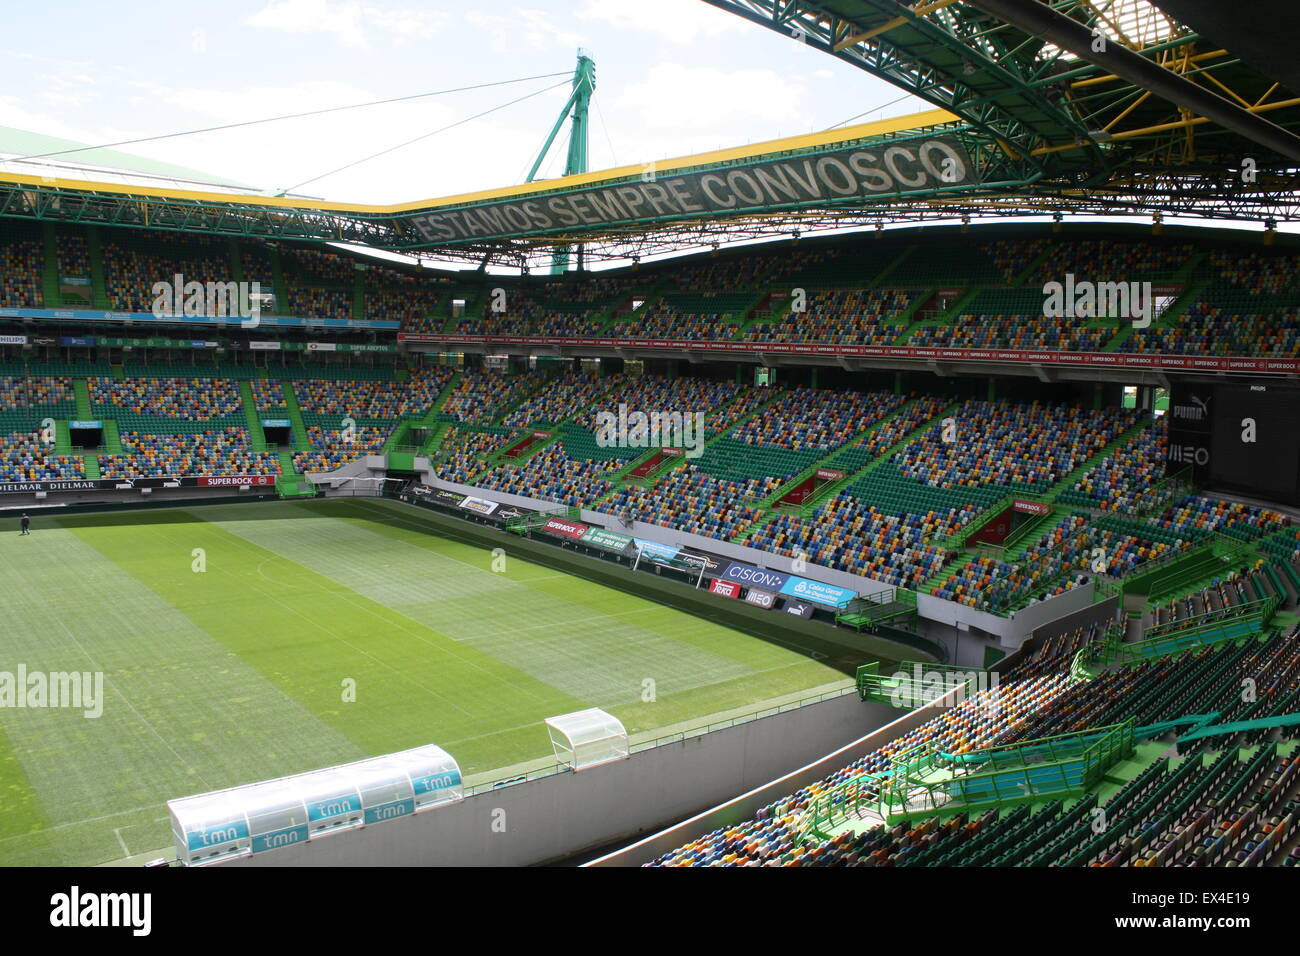 Le Esatadio Alvalado Jose, stade du Sporting Portugal. Banque D'Images